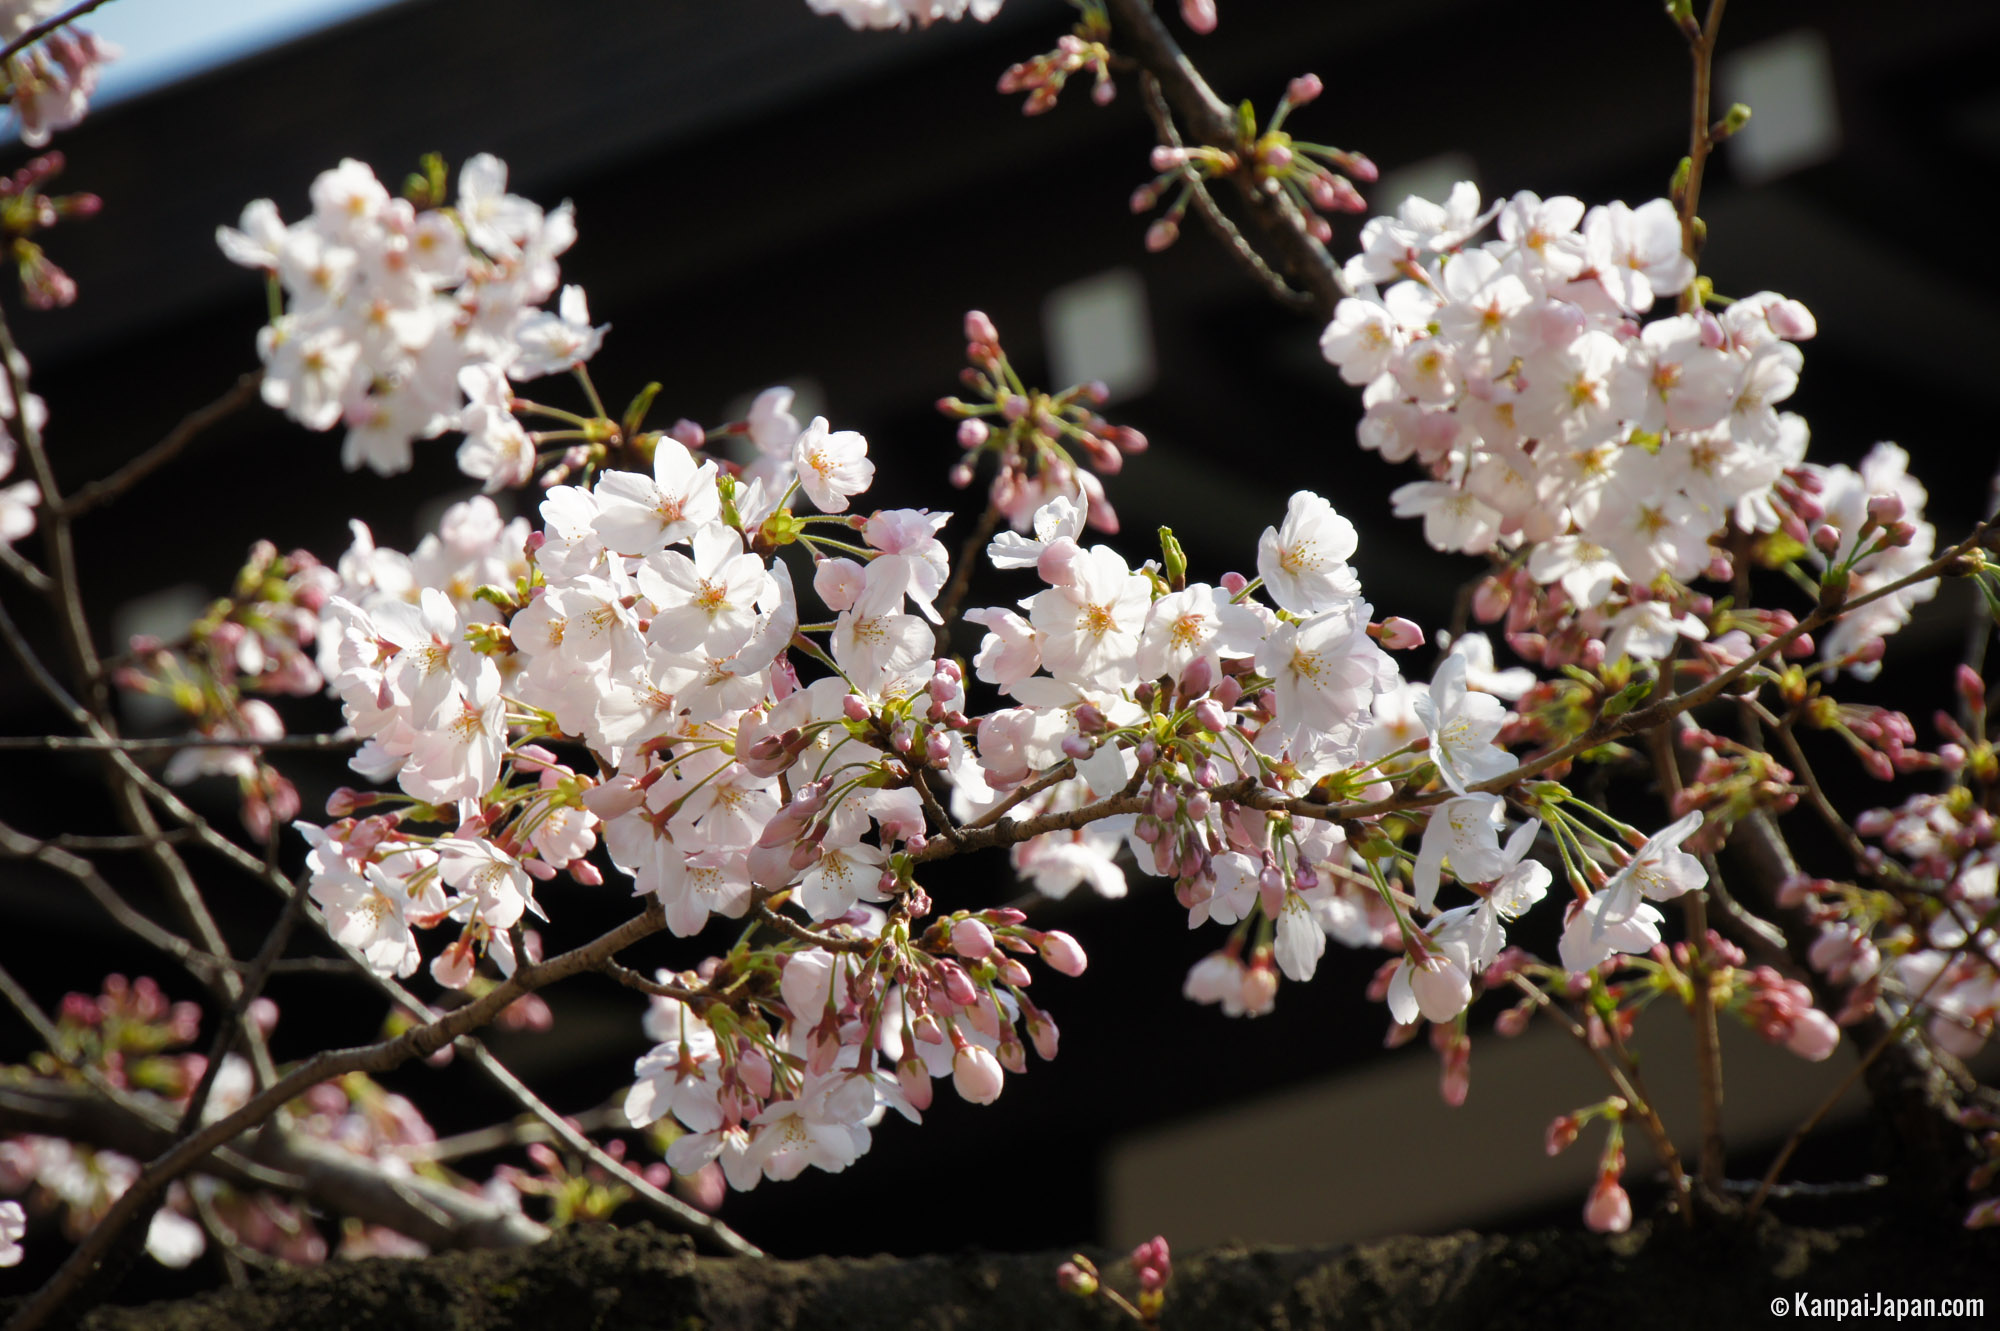 Yasukuni - The Ultimate Reference for Sakura in Tokyo